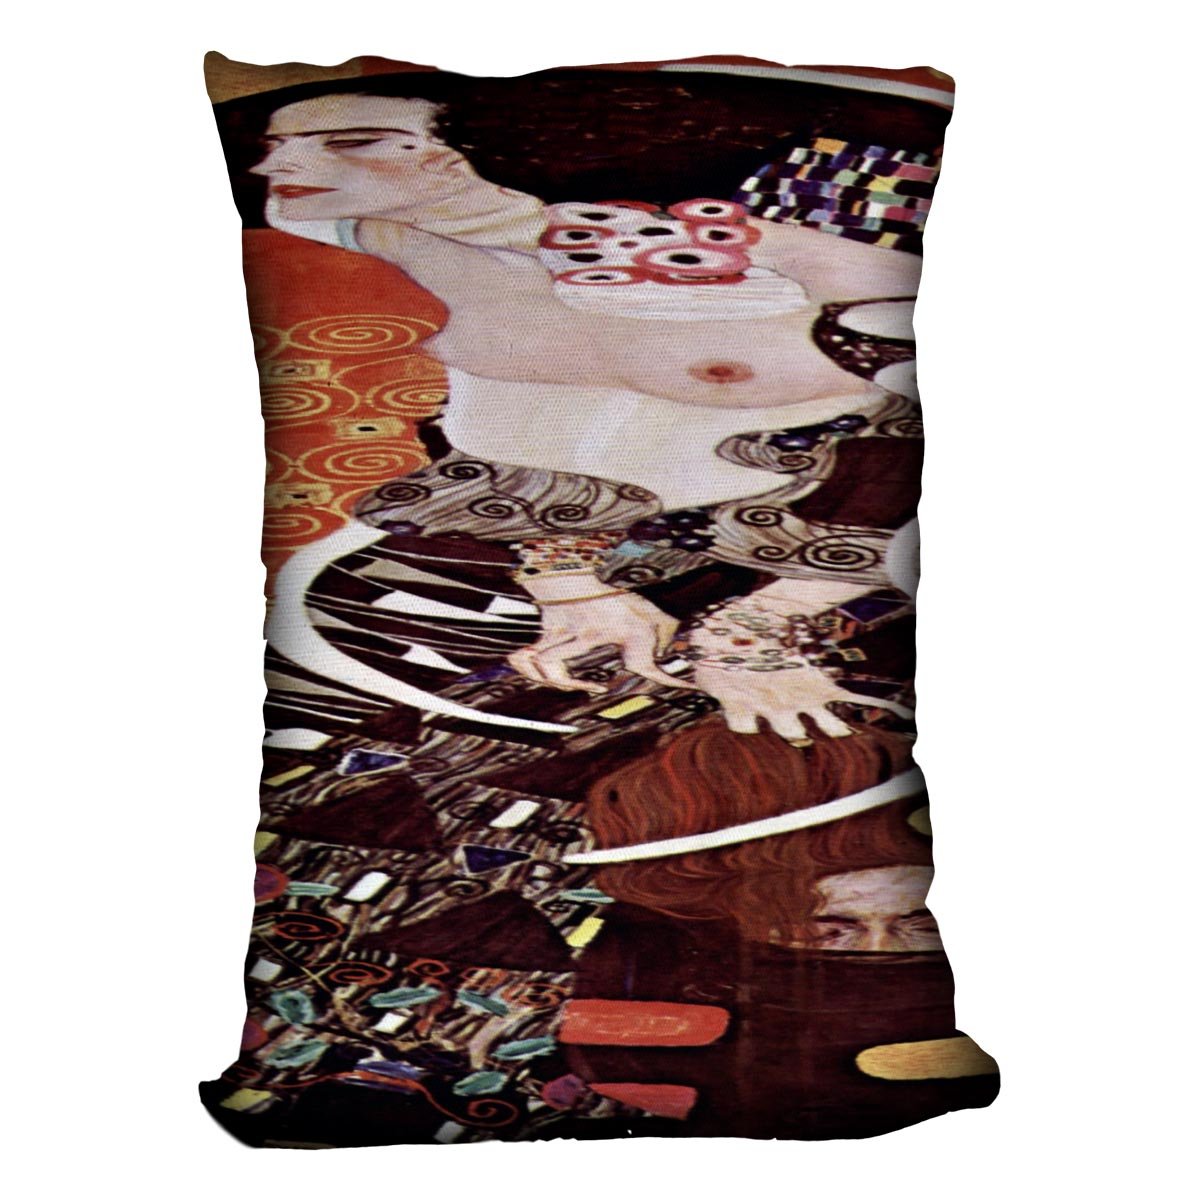 Judith II by Klimt Throw Pillow